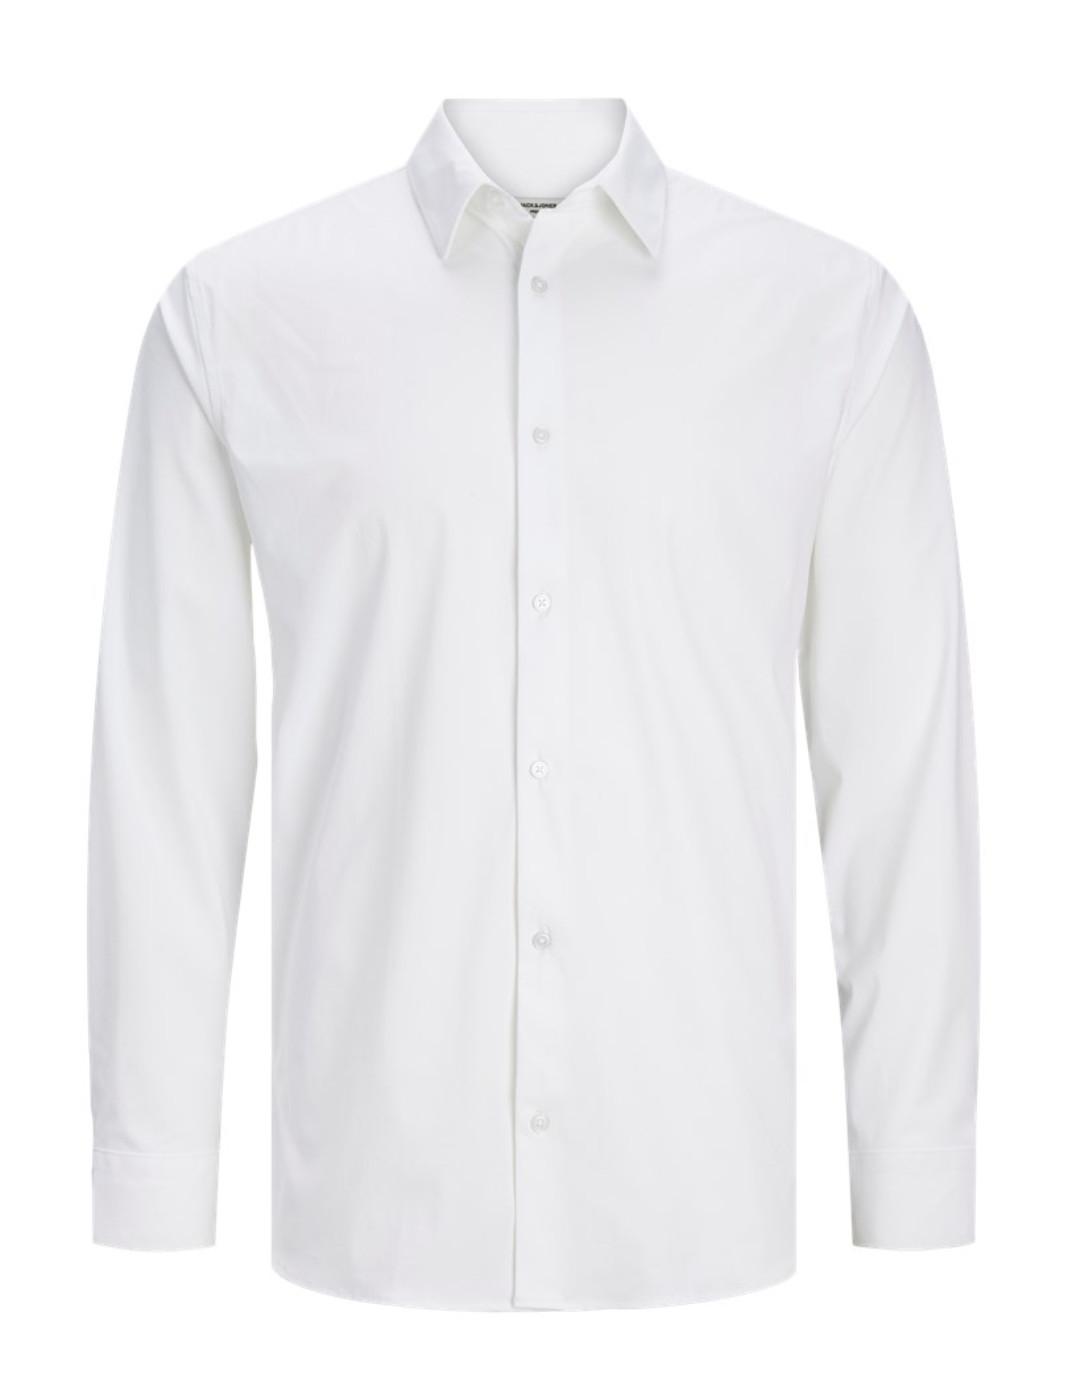 Camisa Jack&Jones Active blanco manga larga para hombre